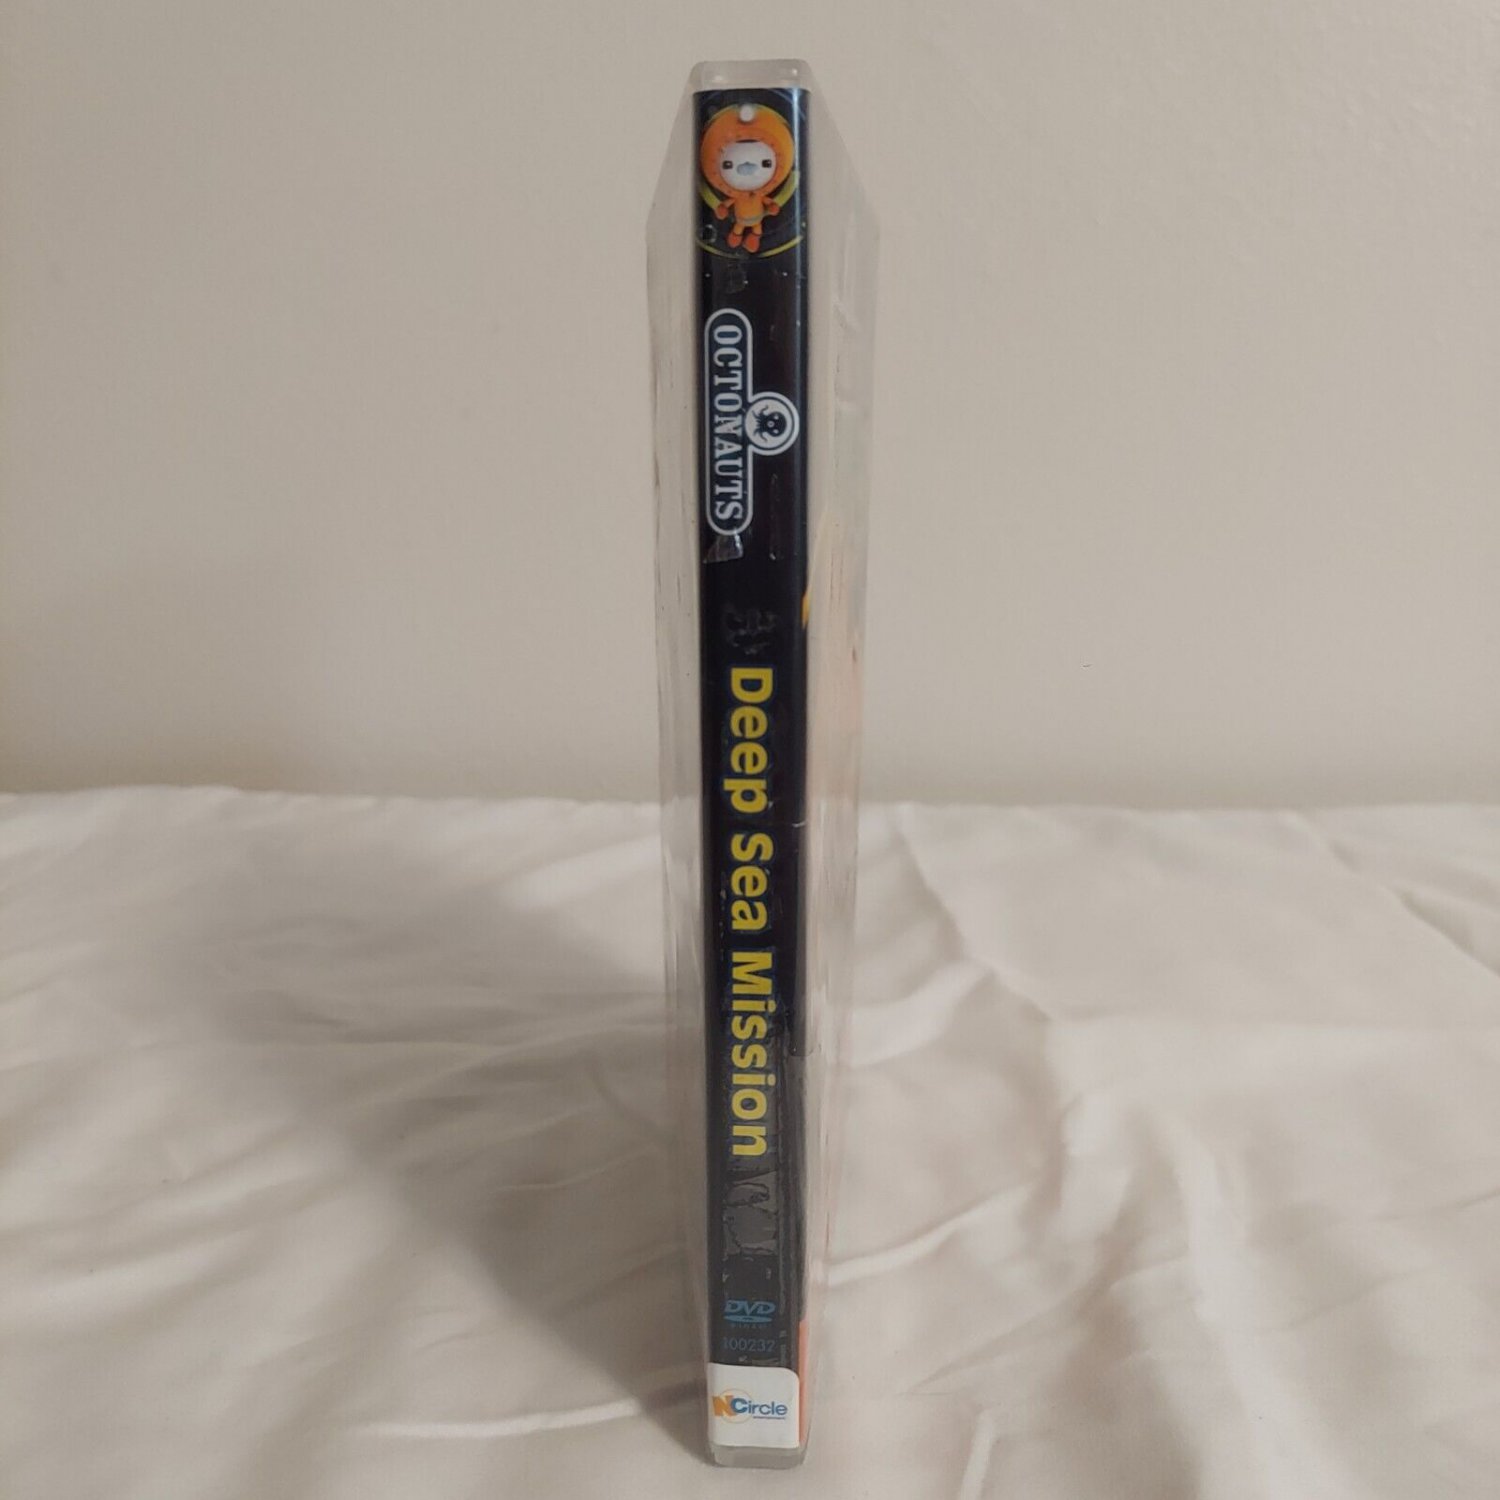 Octonauts: Deep Sea Mission - DVD By Greenall, Simon Explore the ...